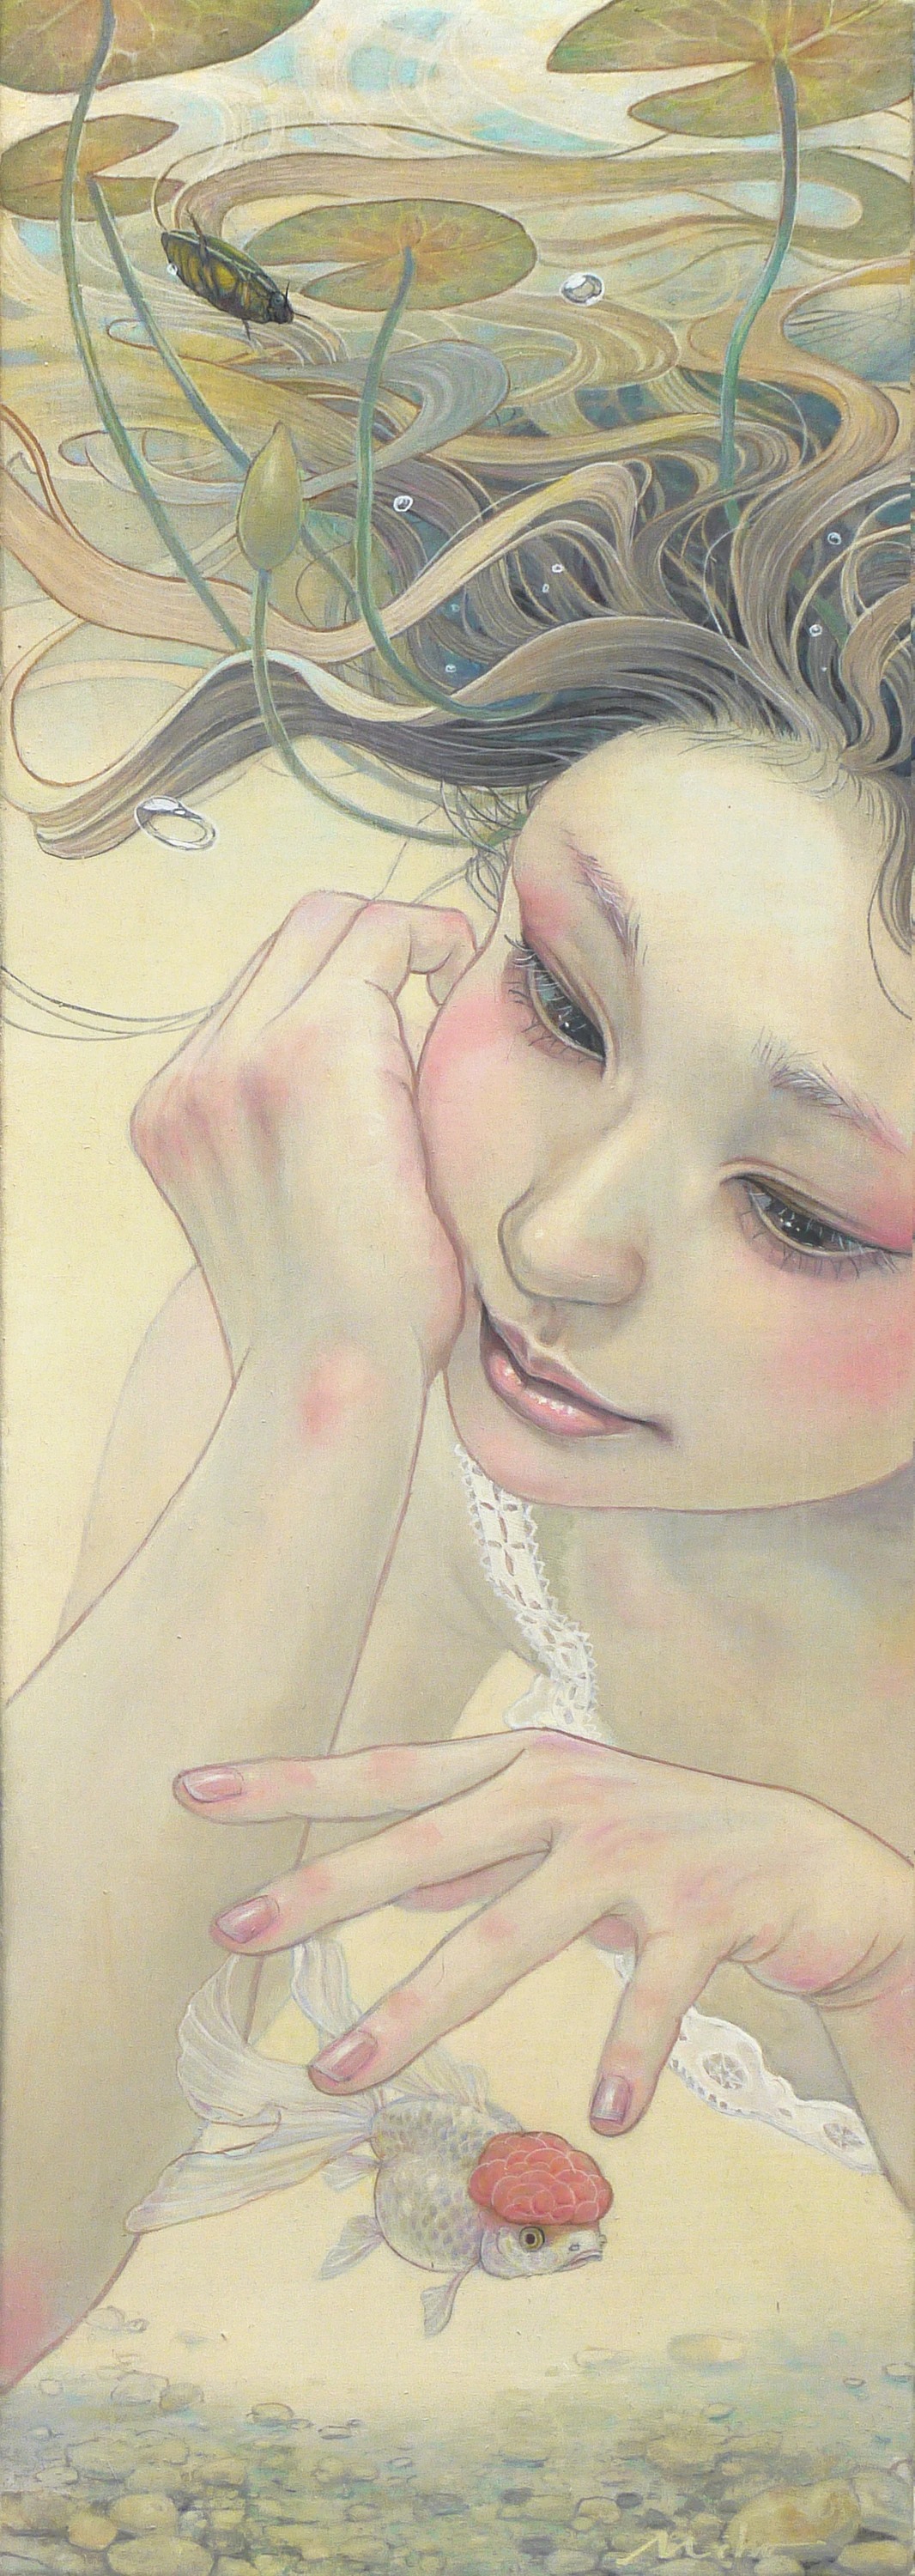 日本插画家Miho Hirano笔下细腻优美的少女插画